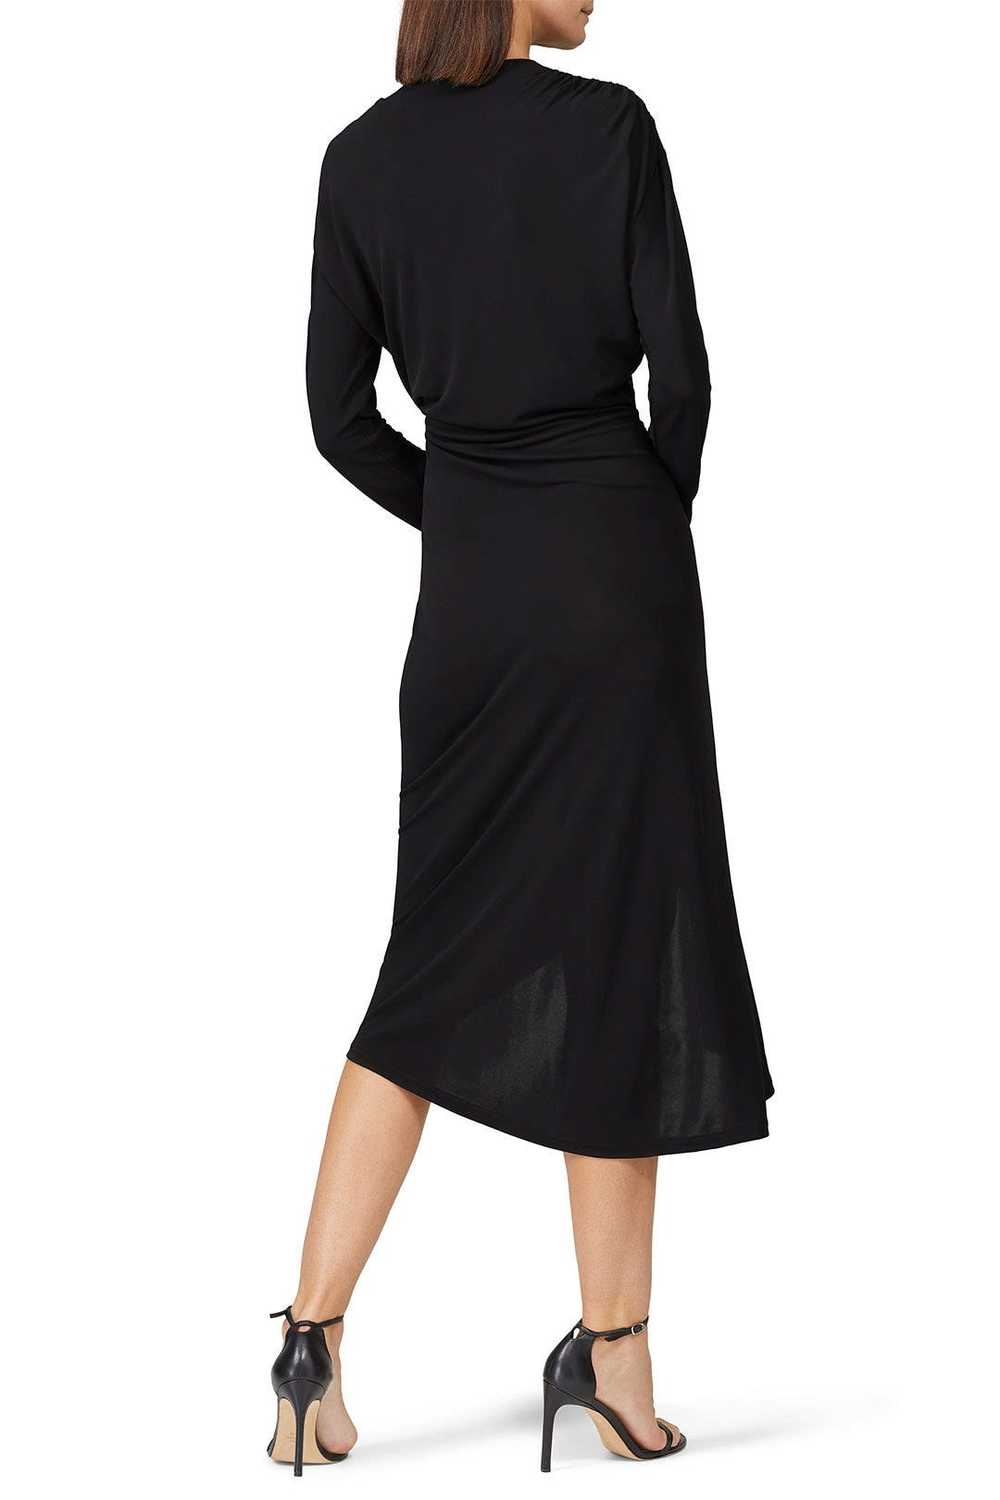 Atlein Black Long Sleeve Ruched Dress - image 3